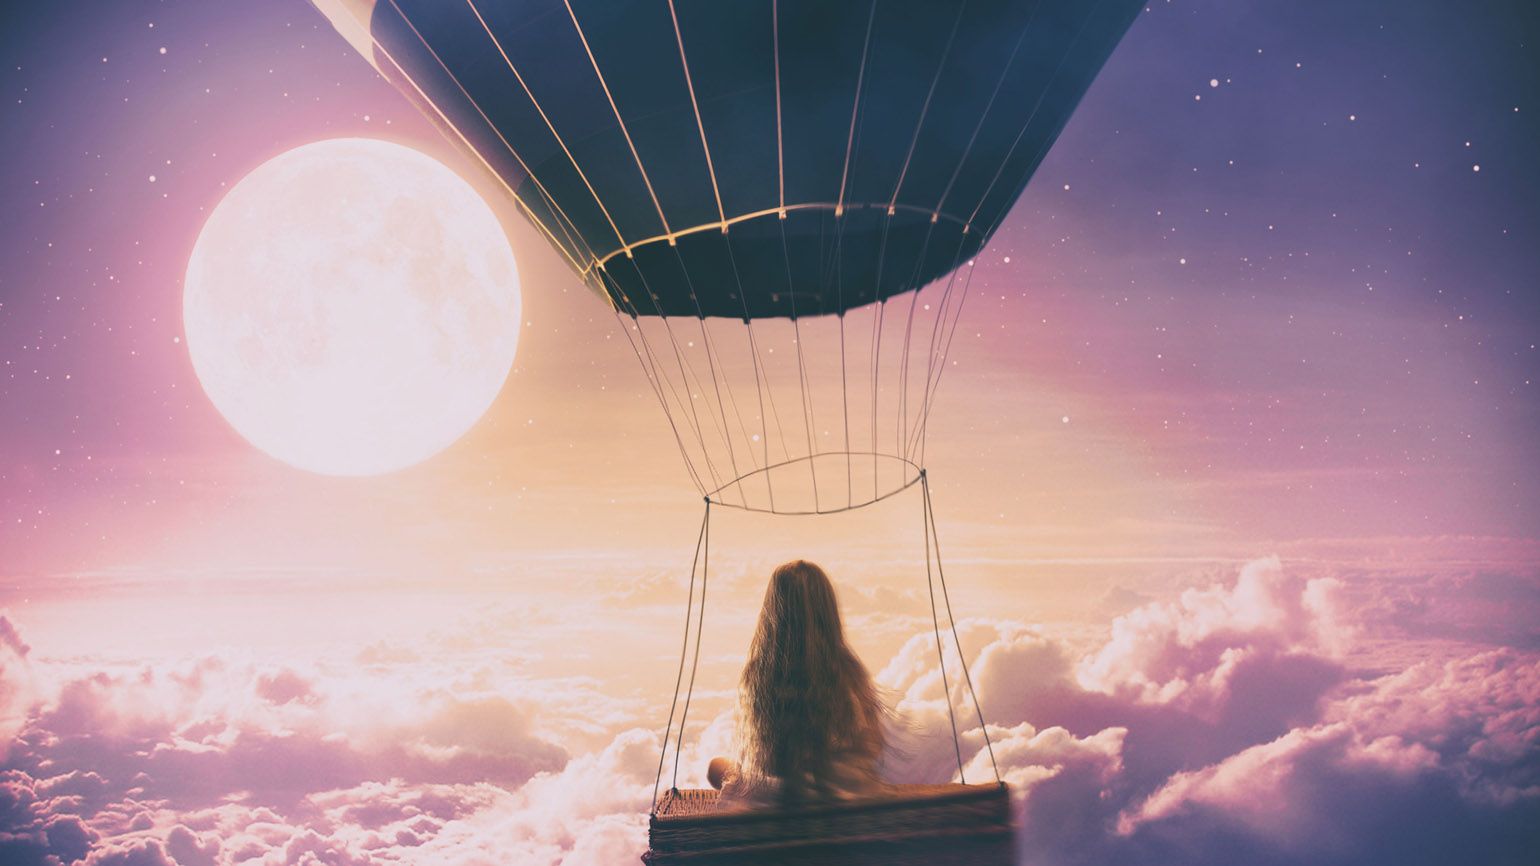 A girl in a hot air balloon dreamscape.